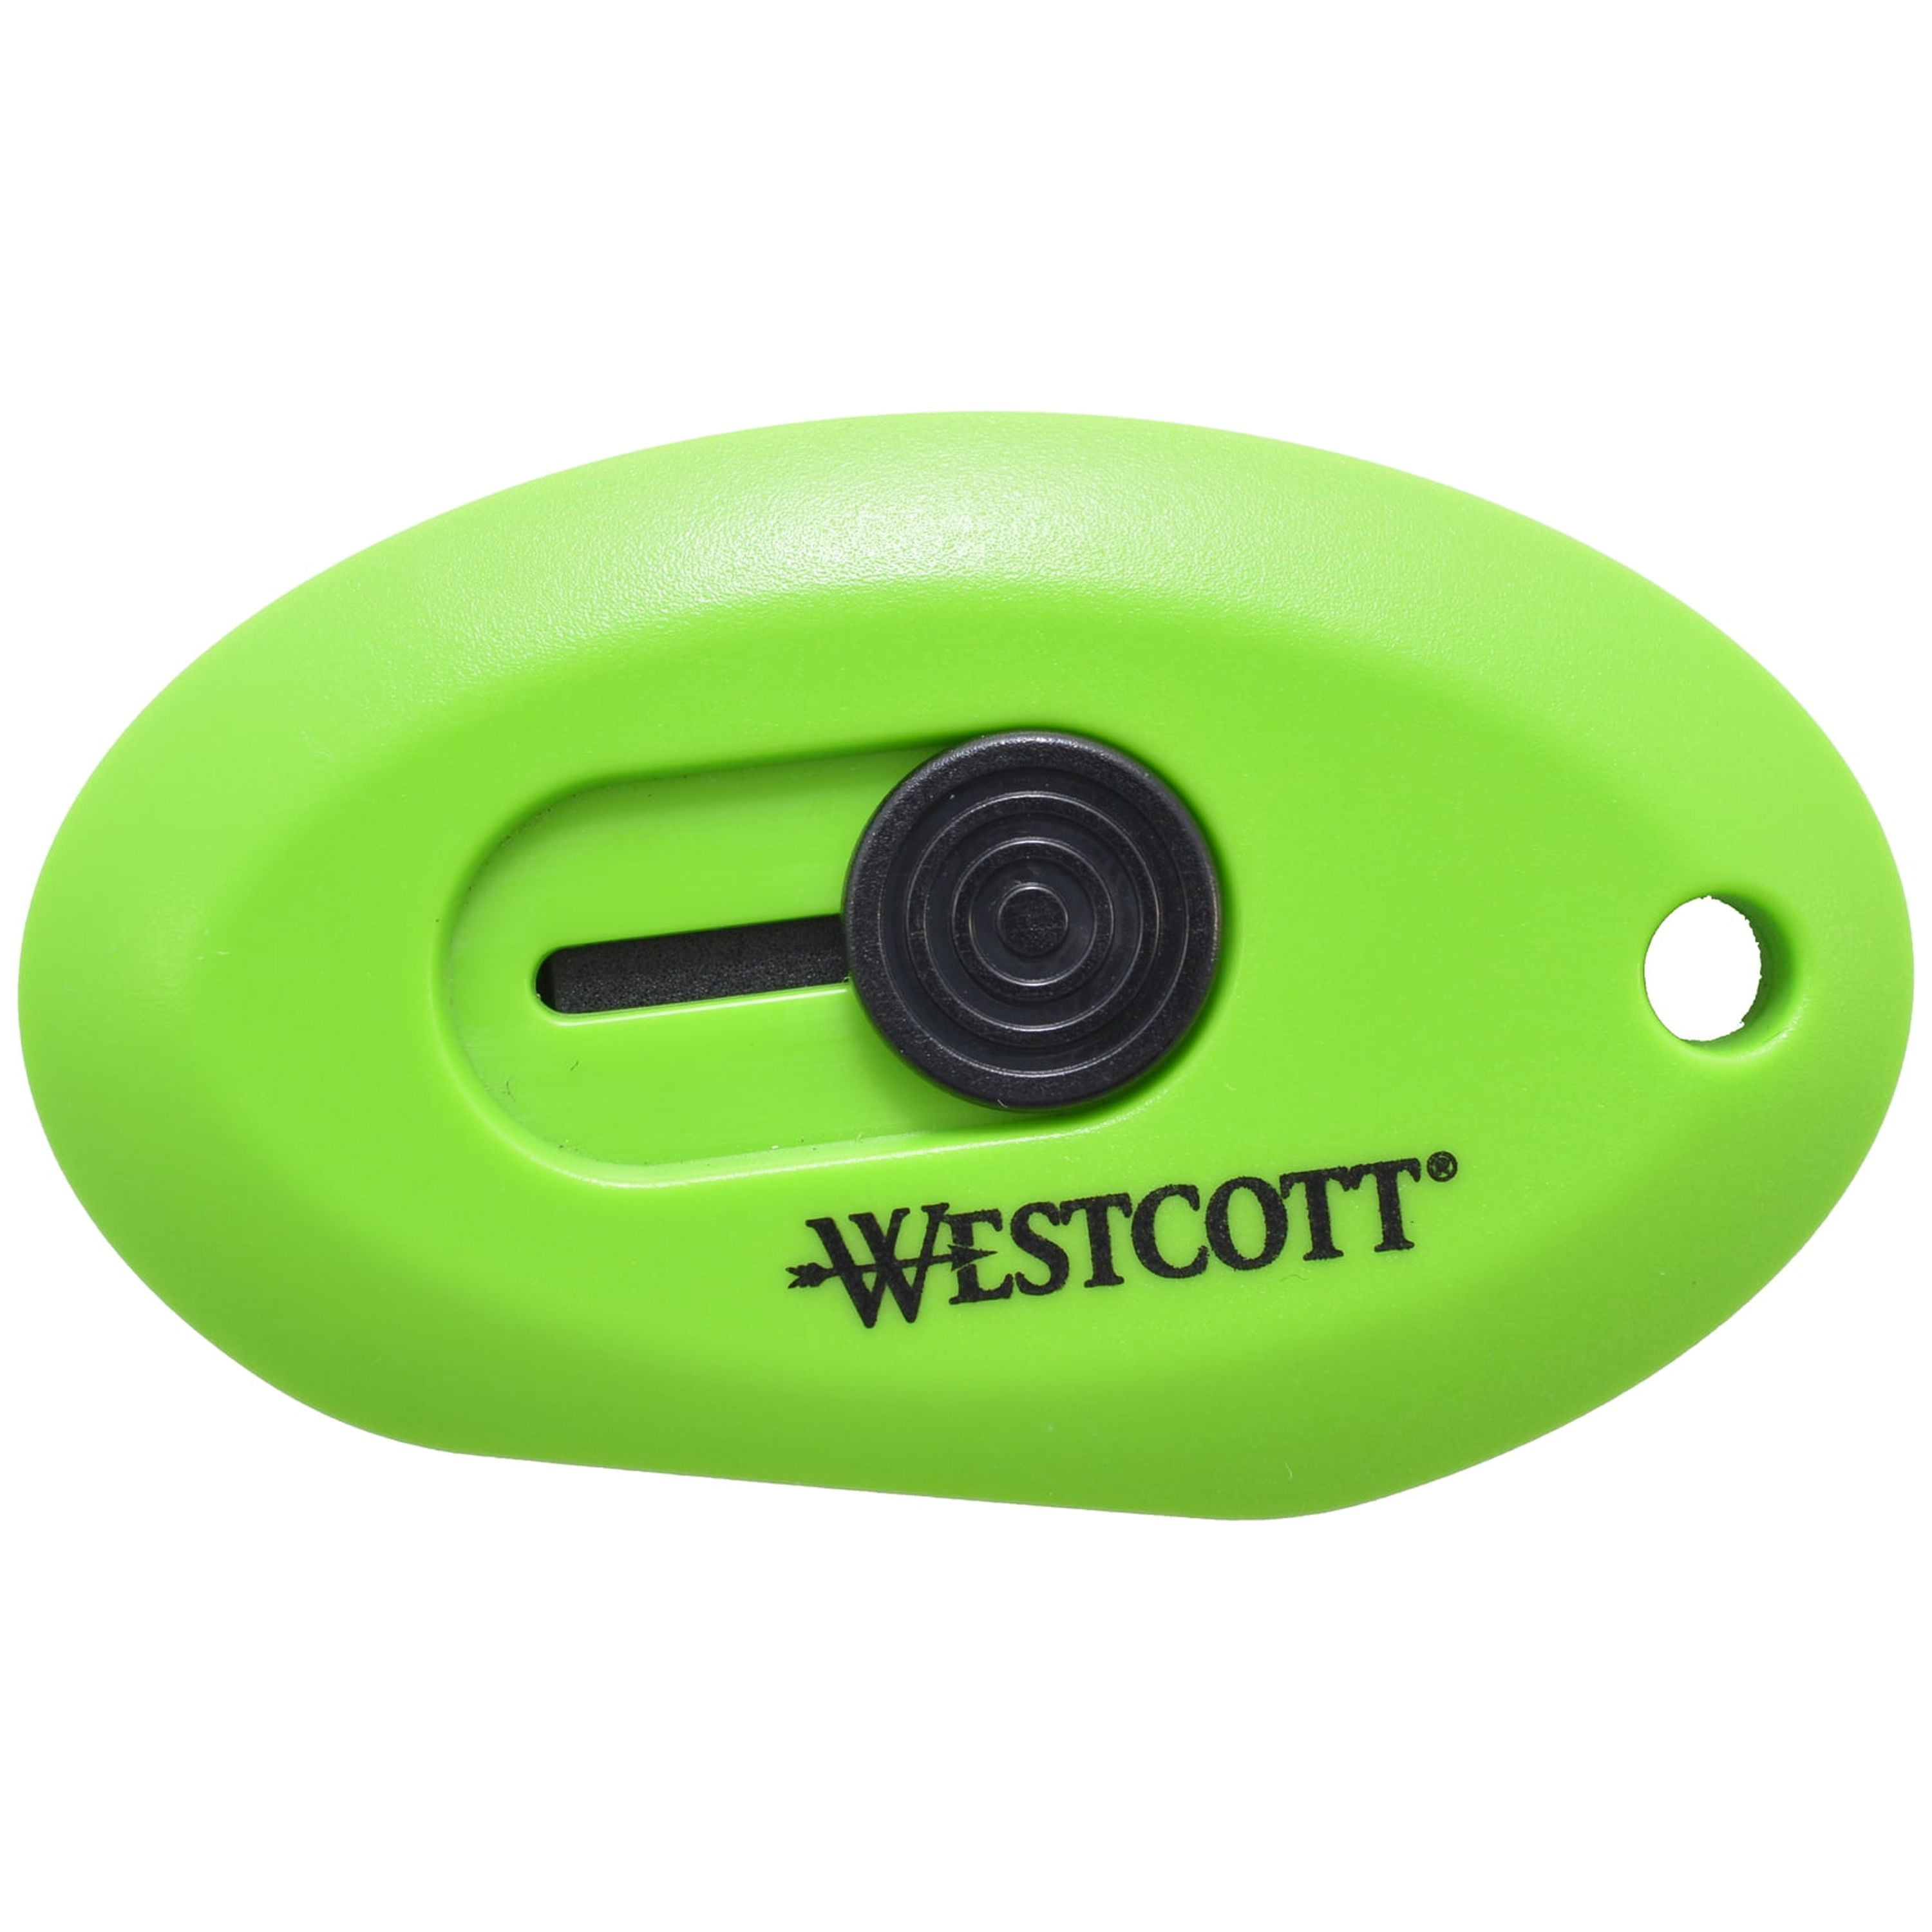 Westcott Utility Cutter, Ceramic, Safety Blade, Mini